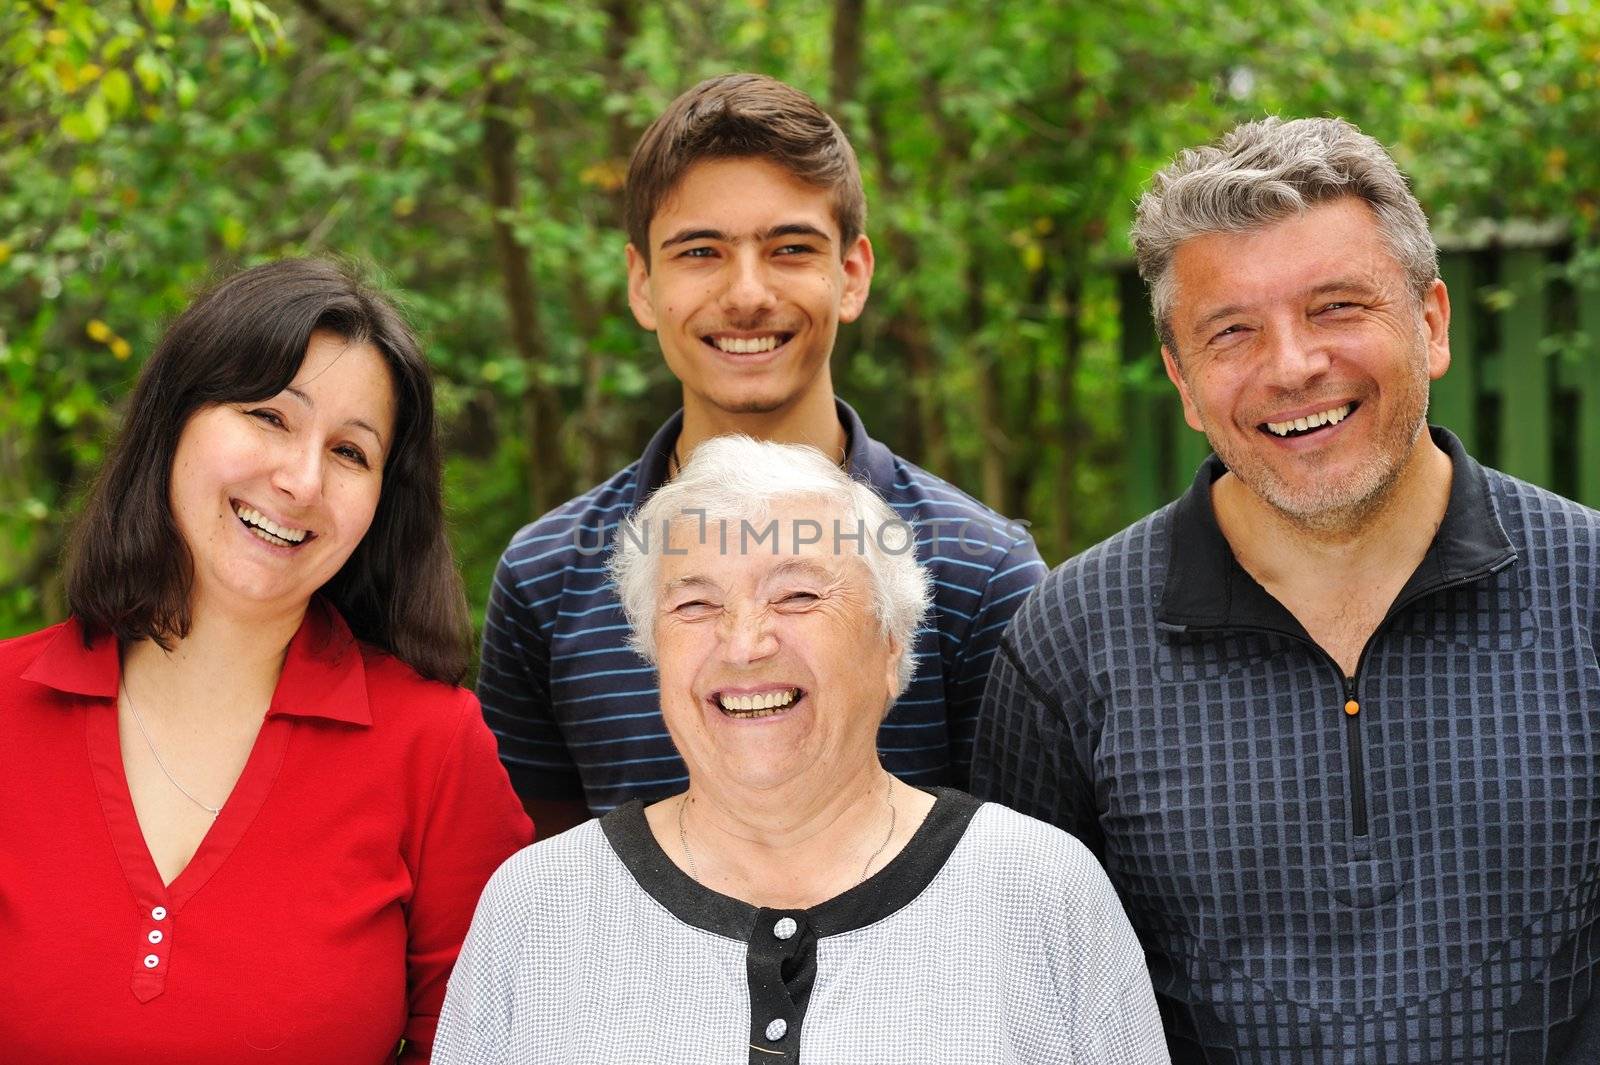 Three generation happy smiling family